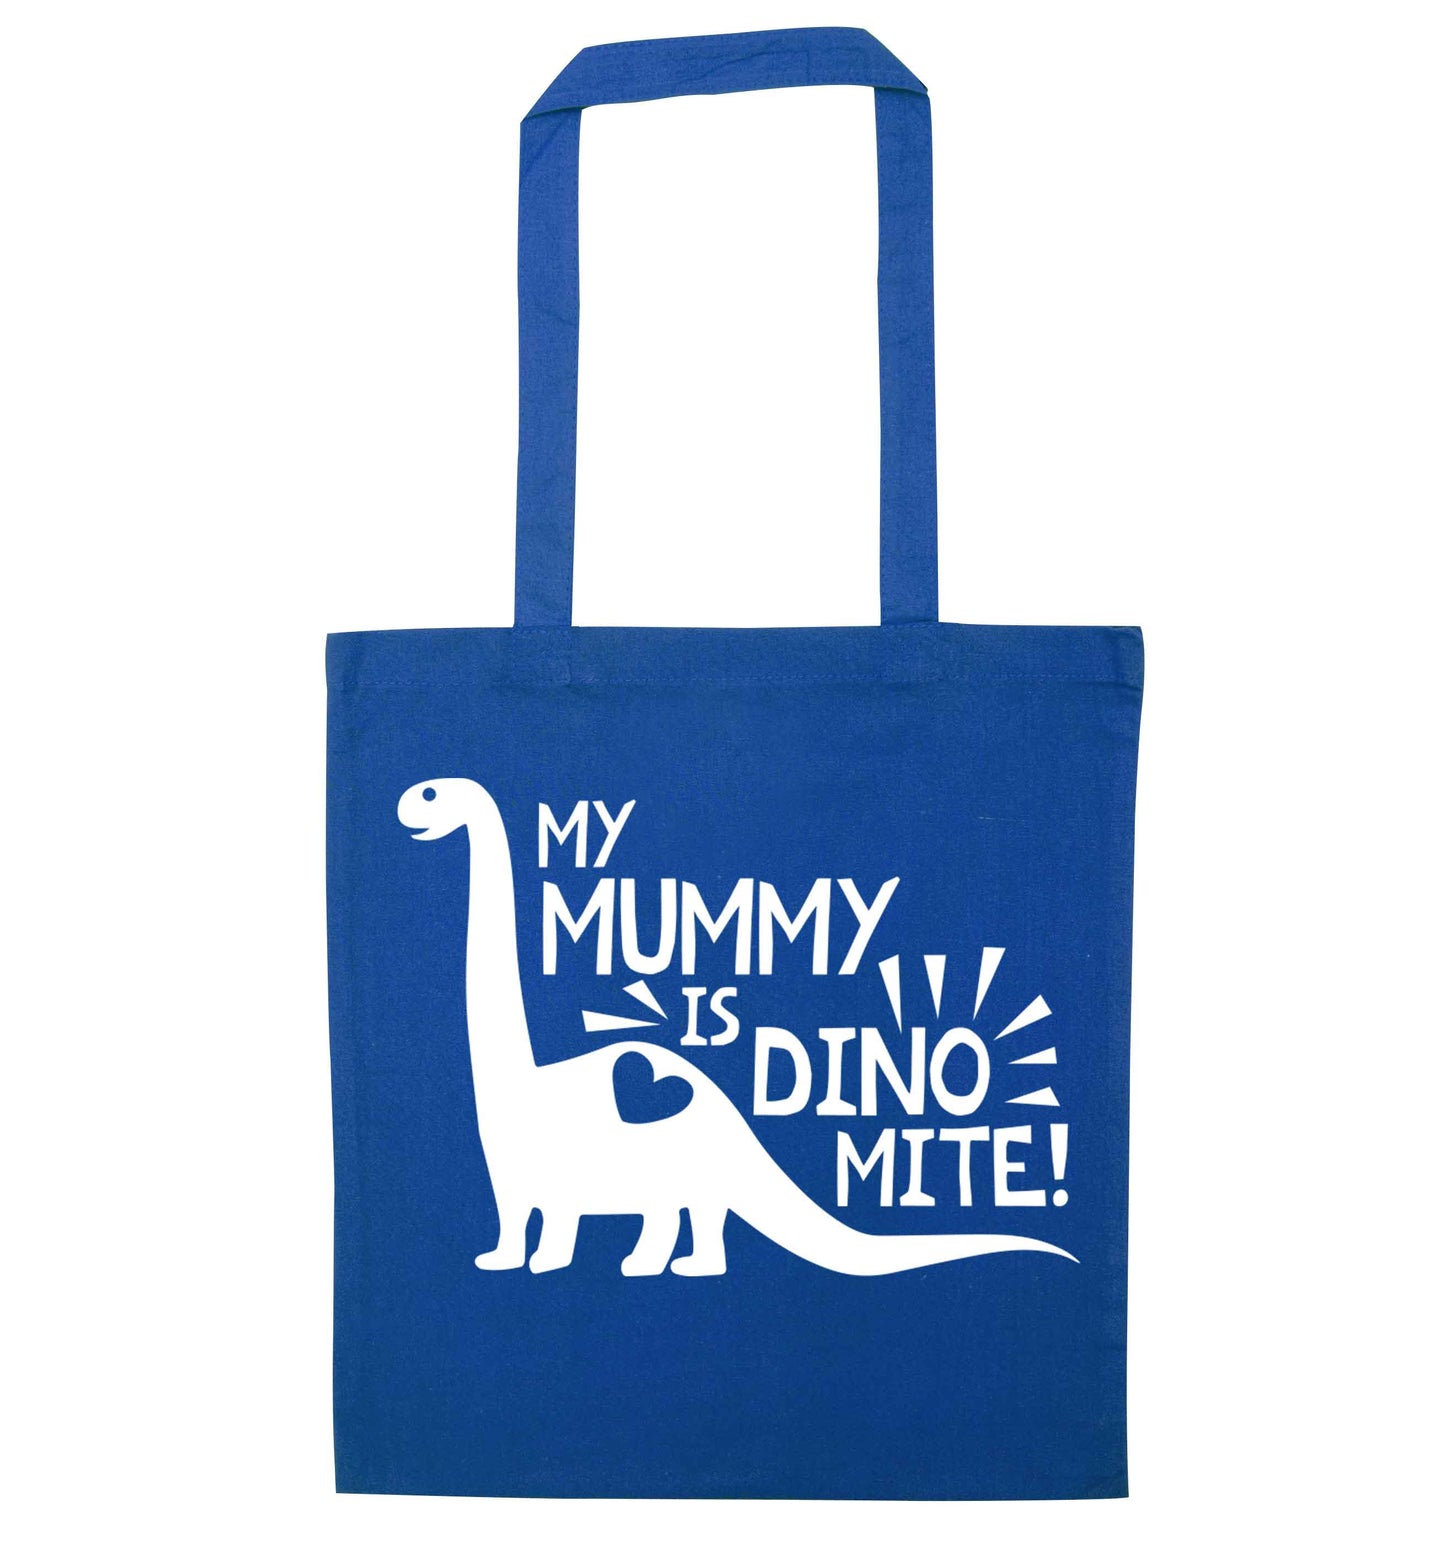 My mummy is dinomite blue tote bag